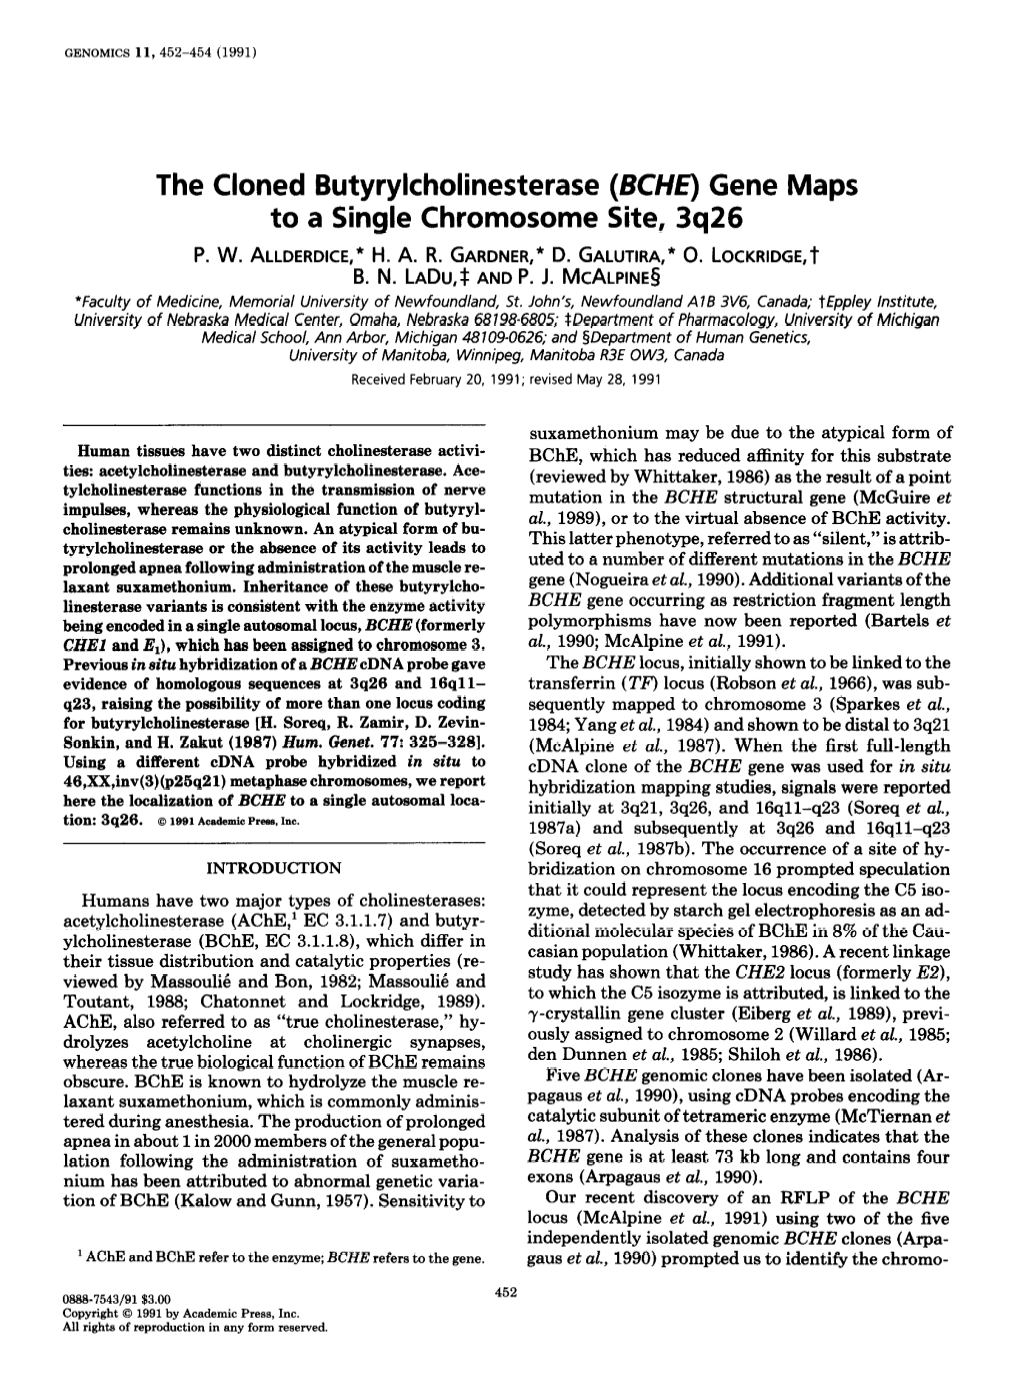 BCHE) Gene Maps to a Single Chromosome Site, 3Q26 P